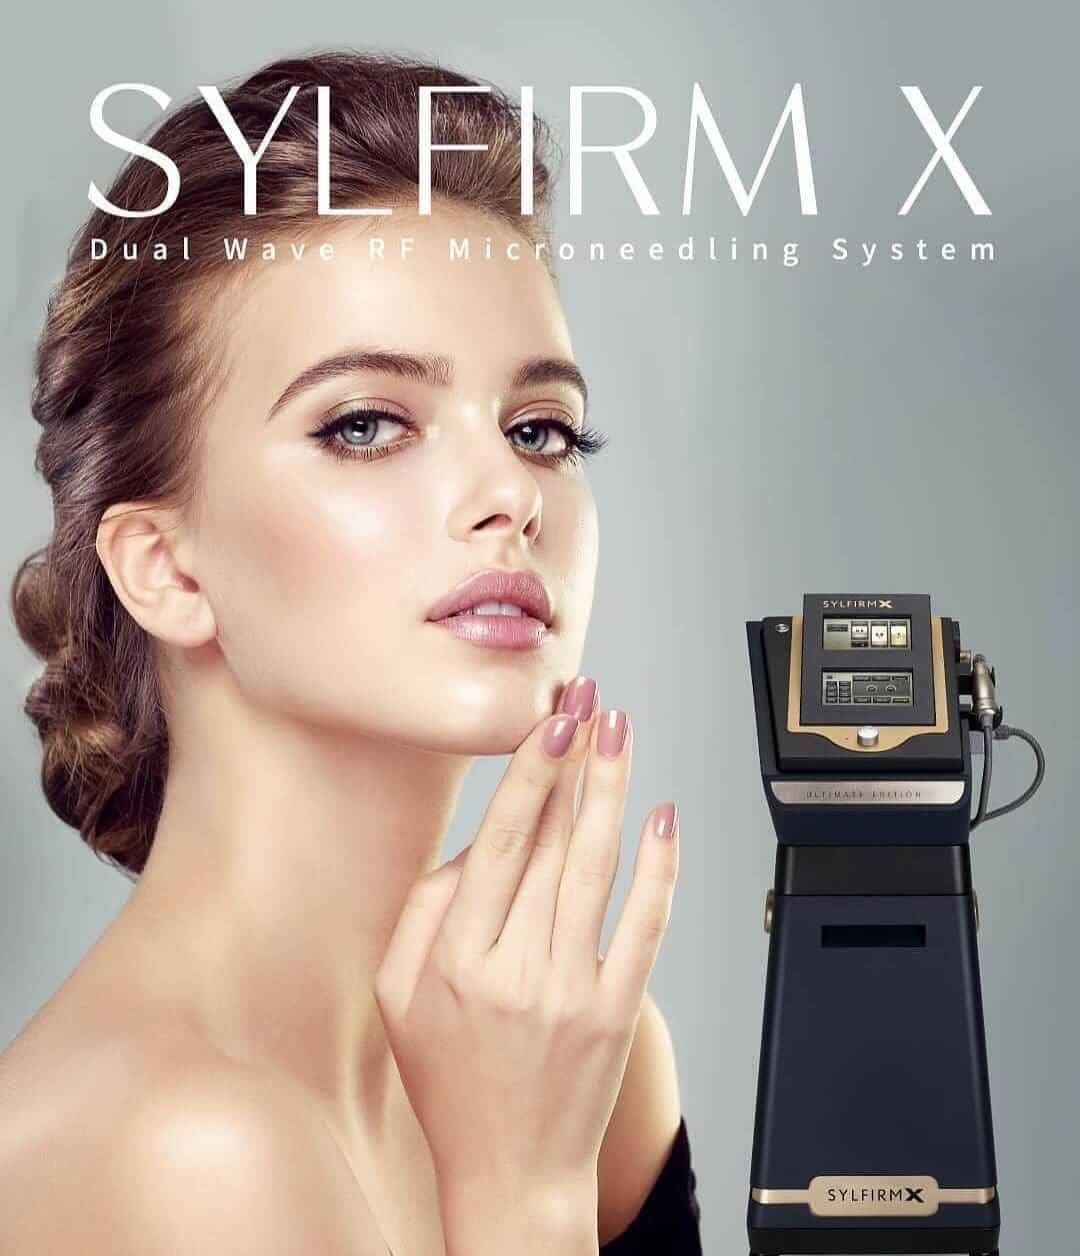 Sylfirm-x microneedling RF for skin tightening